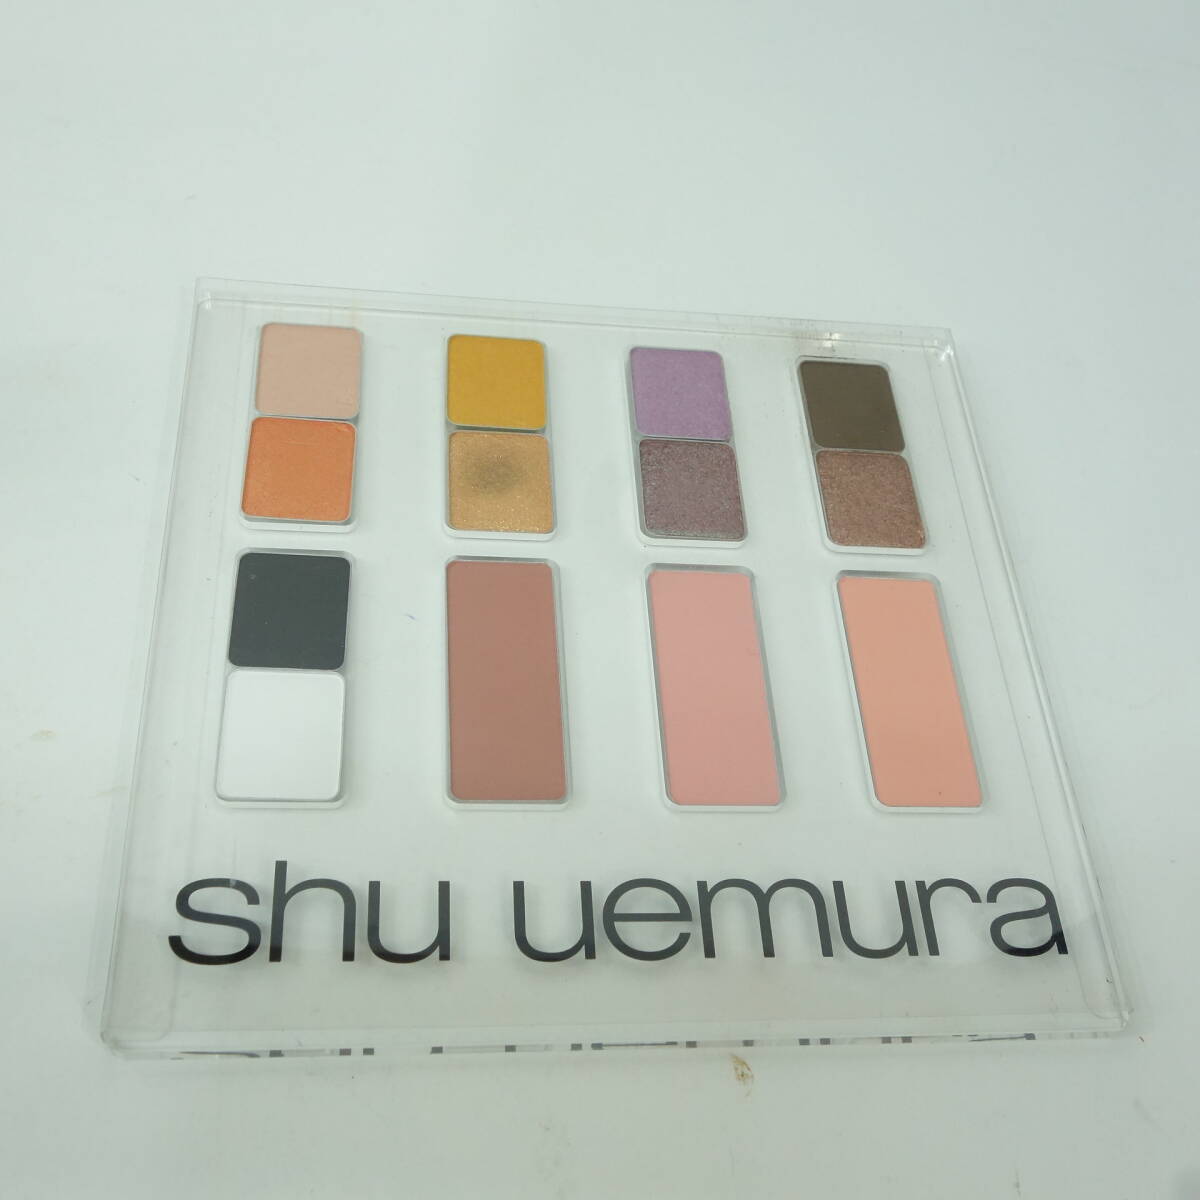 110♭shu uemura Shu Uemura foundation face powder lip etc. cosme set summarize * used 